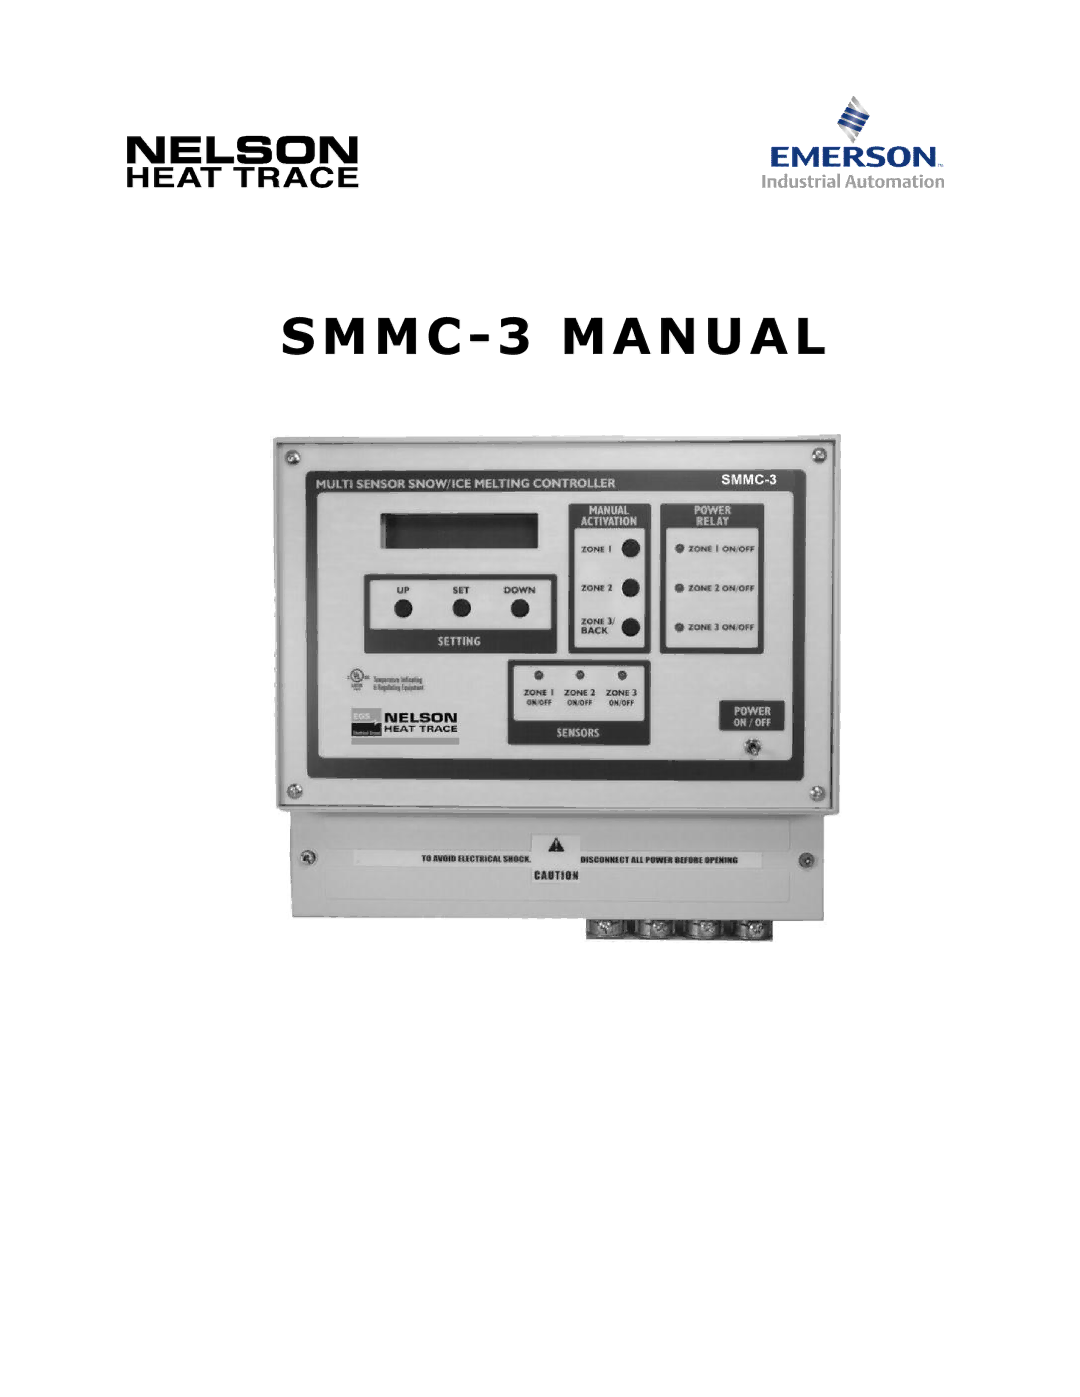 Emerson manual SMMC-3 Manual 